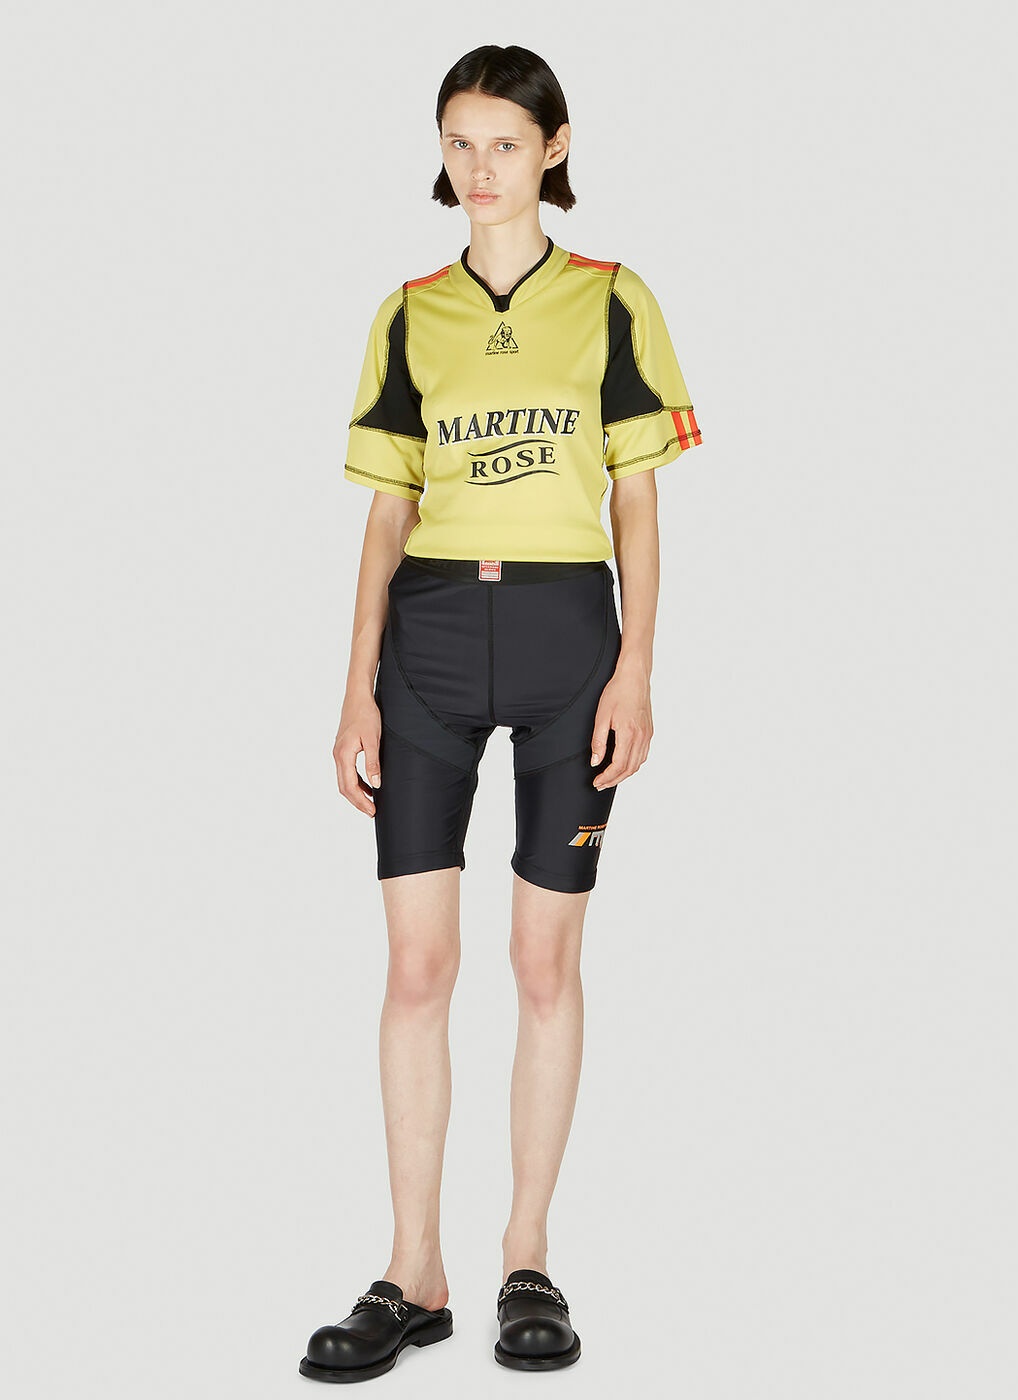 Martine Rose - Logo Cycling Shorts in Black Martine Rose